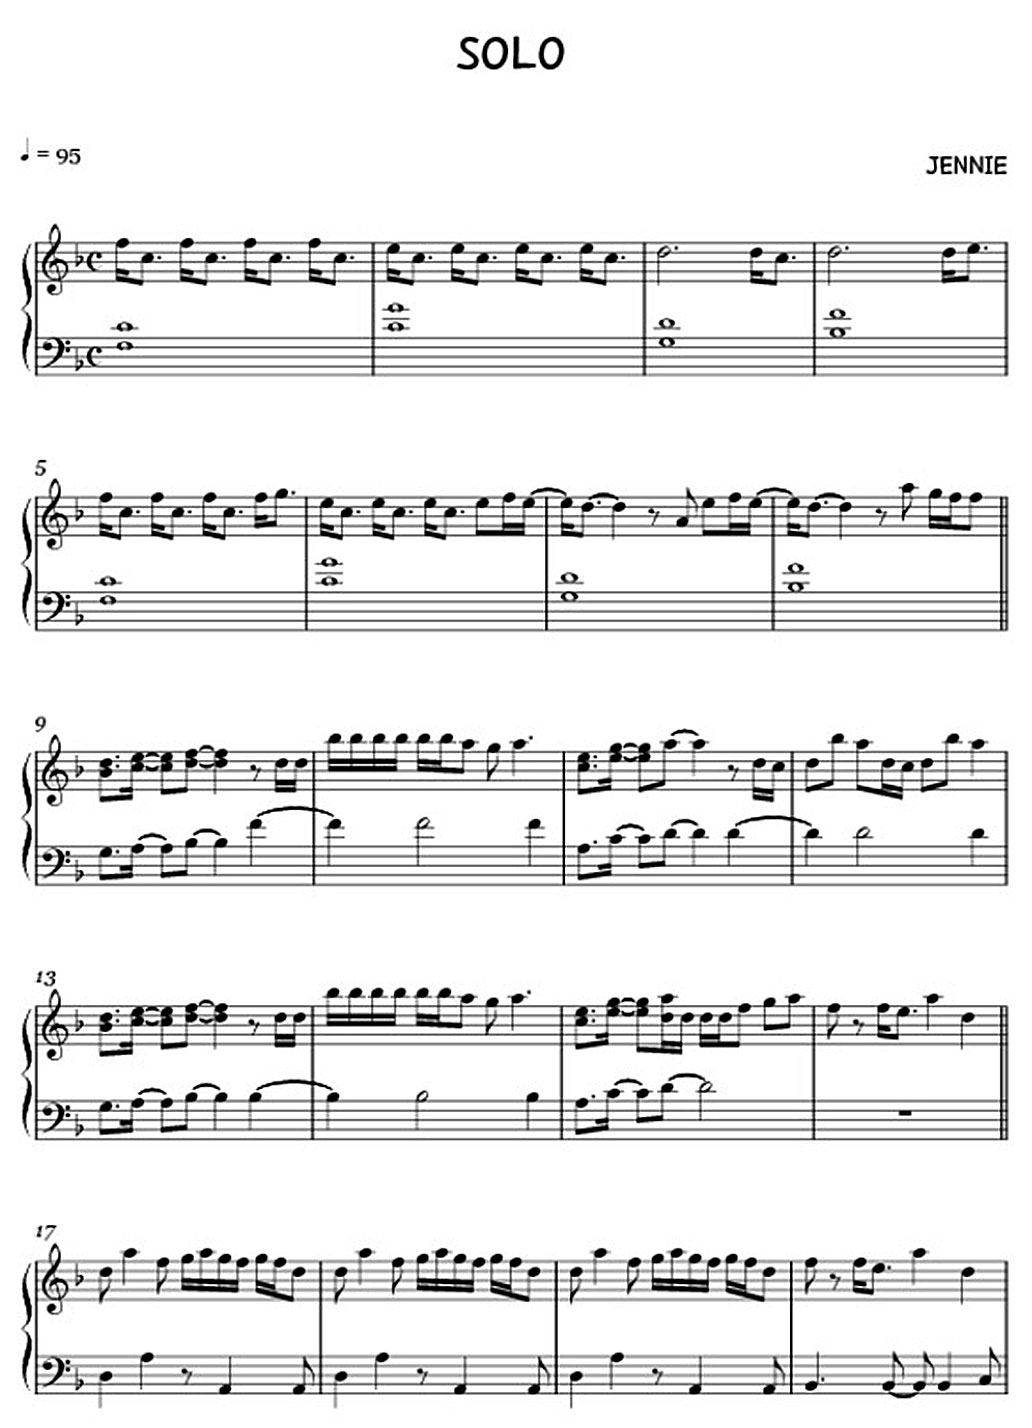 solo piano sheet music notes